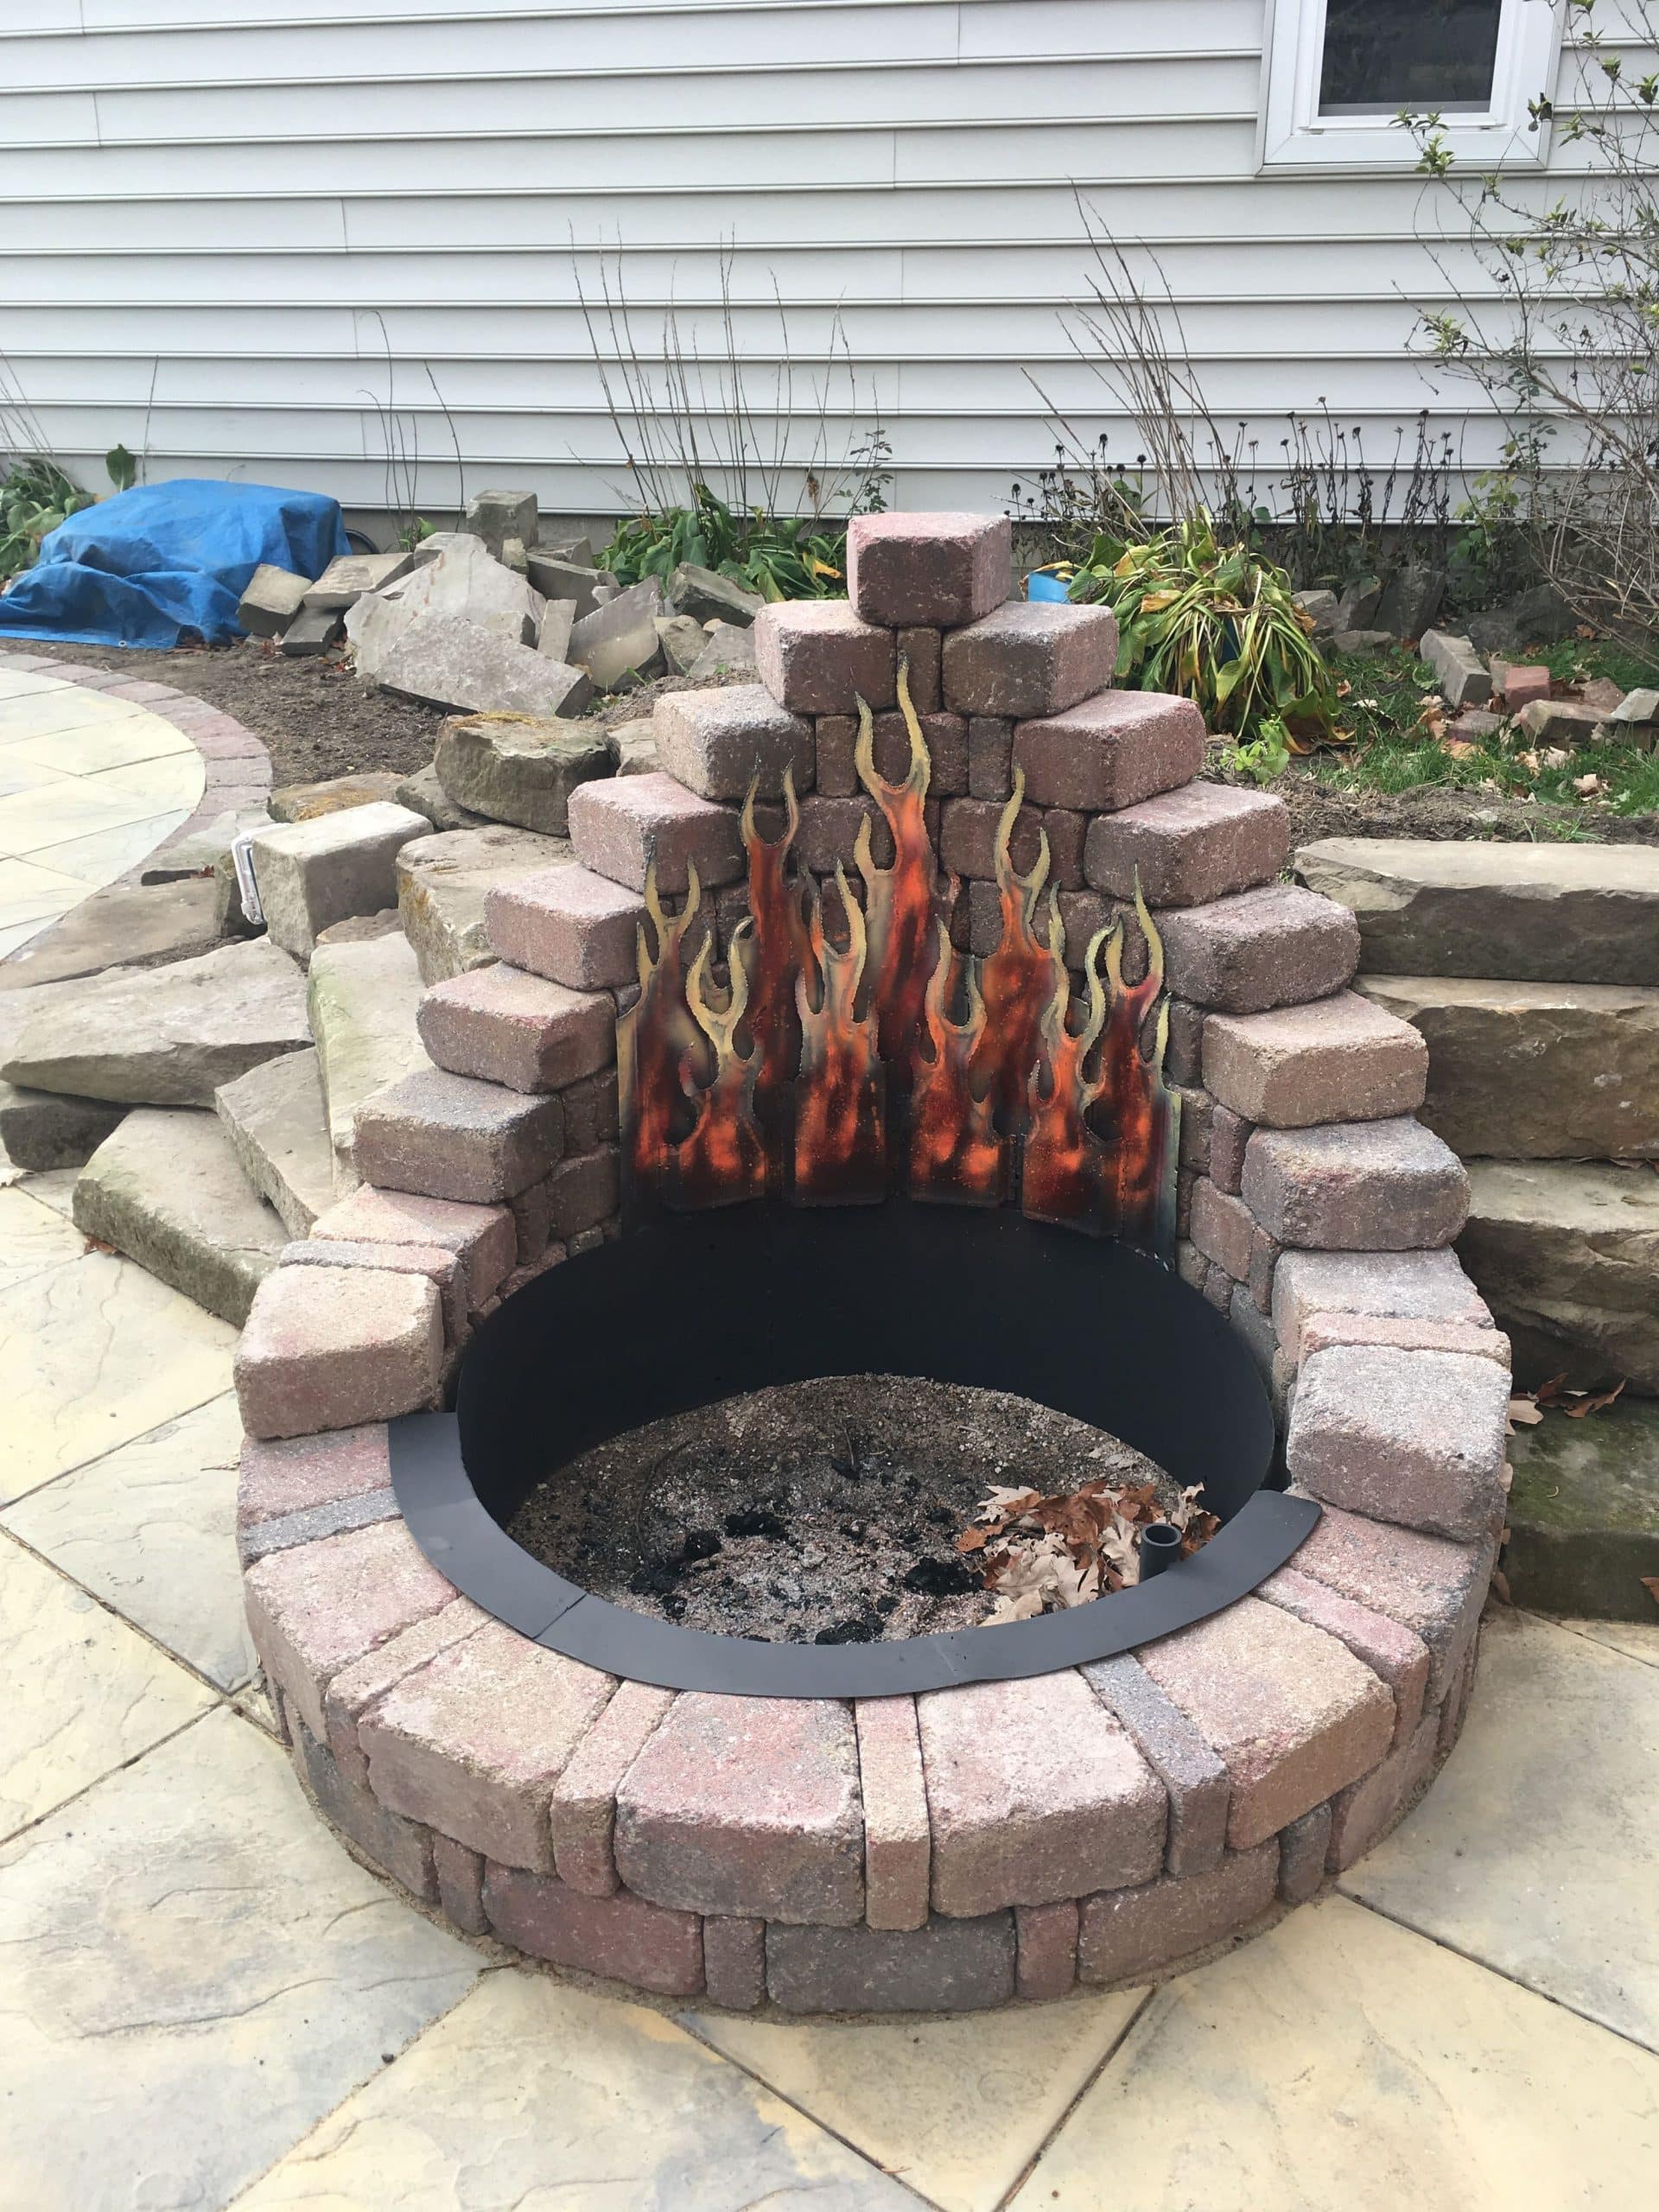 13 Inspiring DIY Fire Pit Ideas to Improve Your Backyard